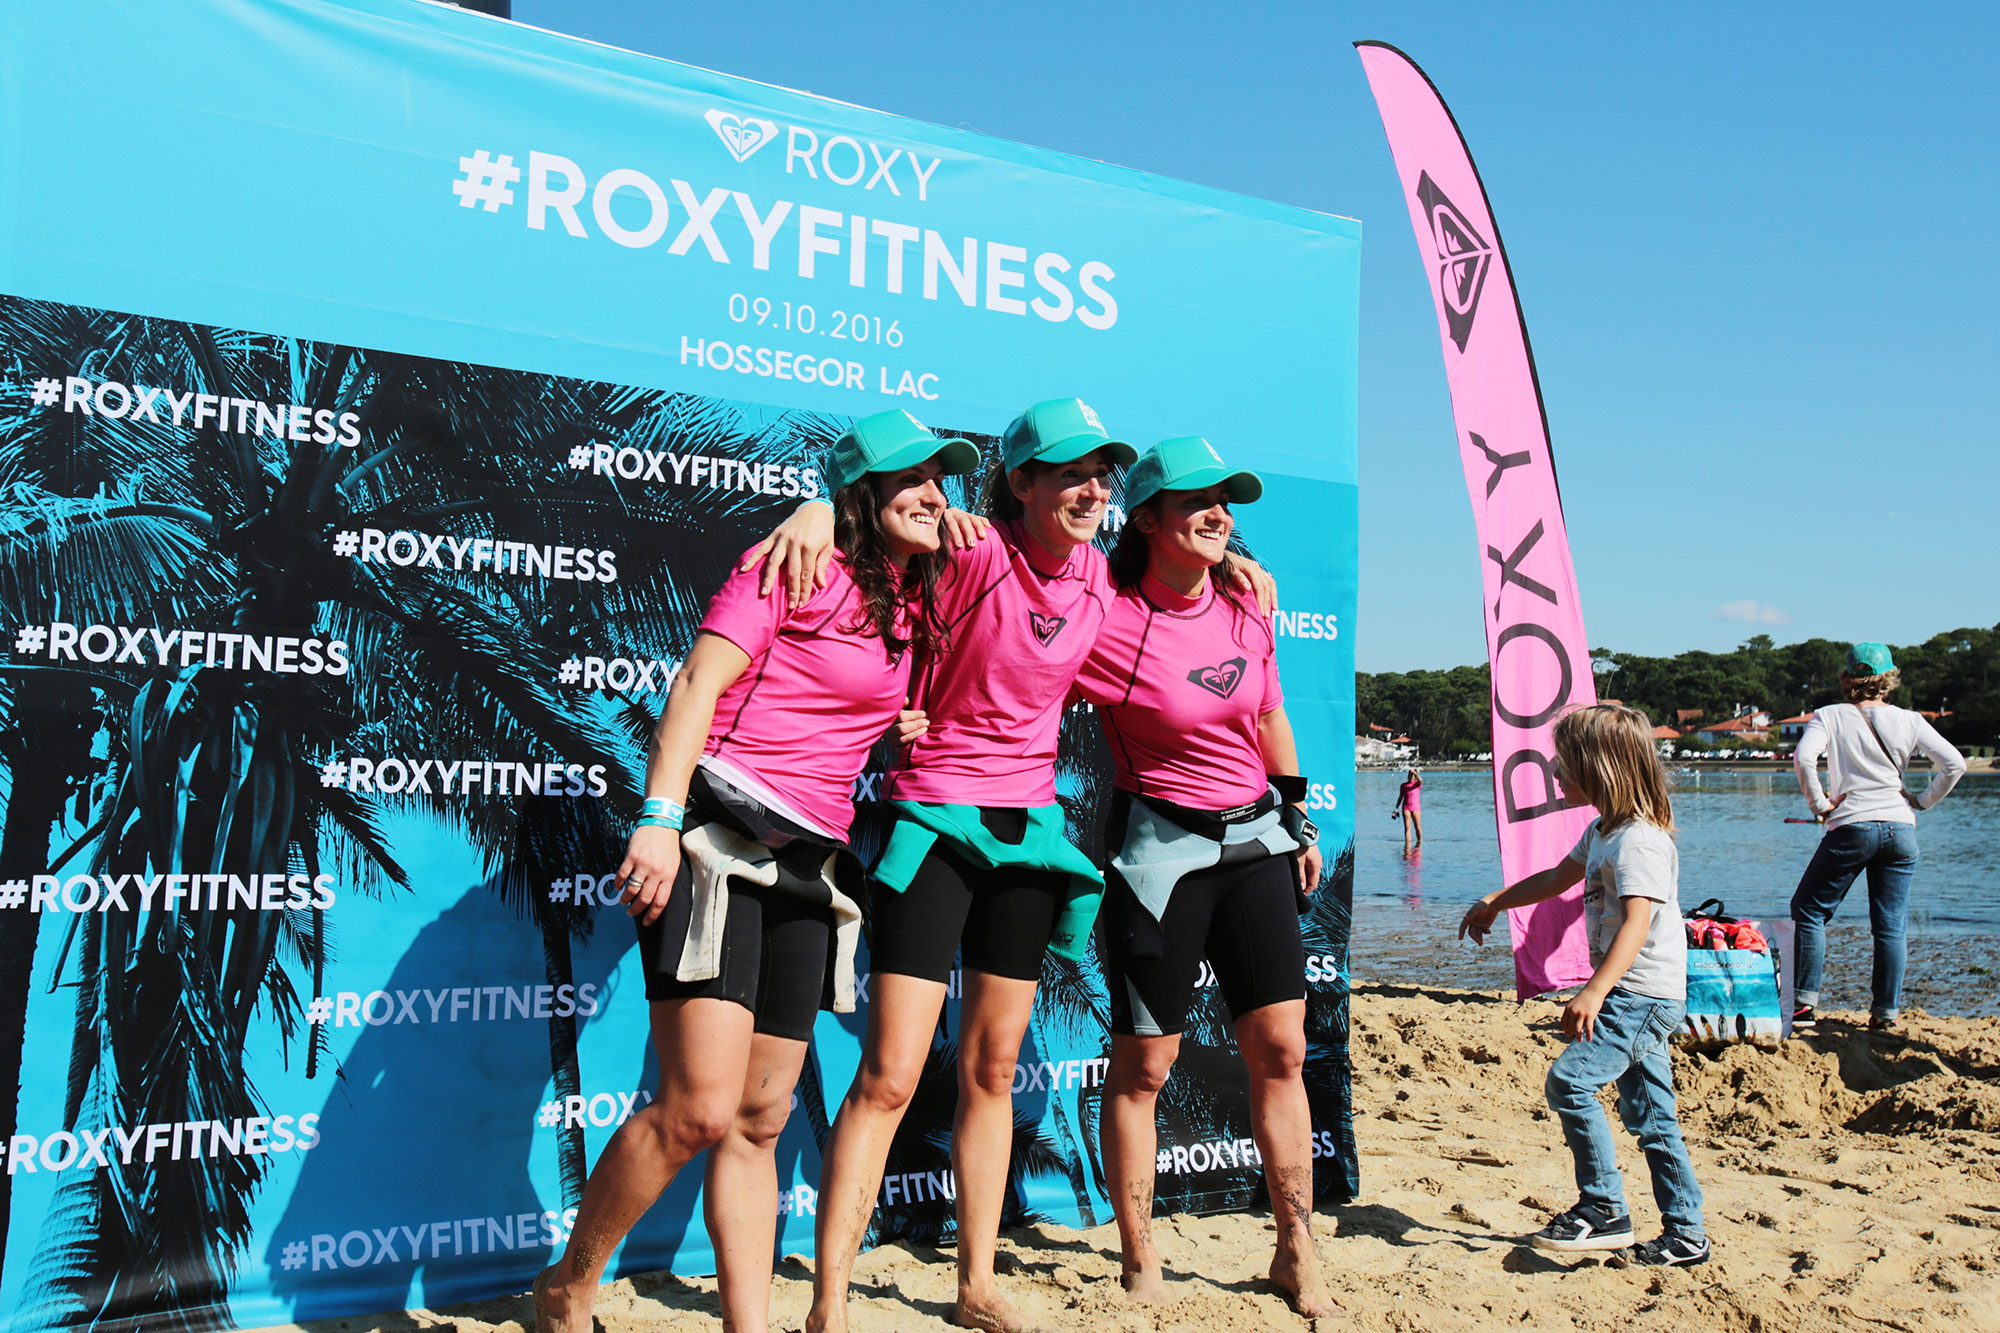 Thousands of girls take up the #ROXYfitness Challenge in Hossegor, France